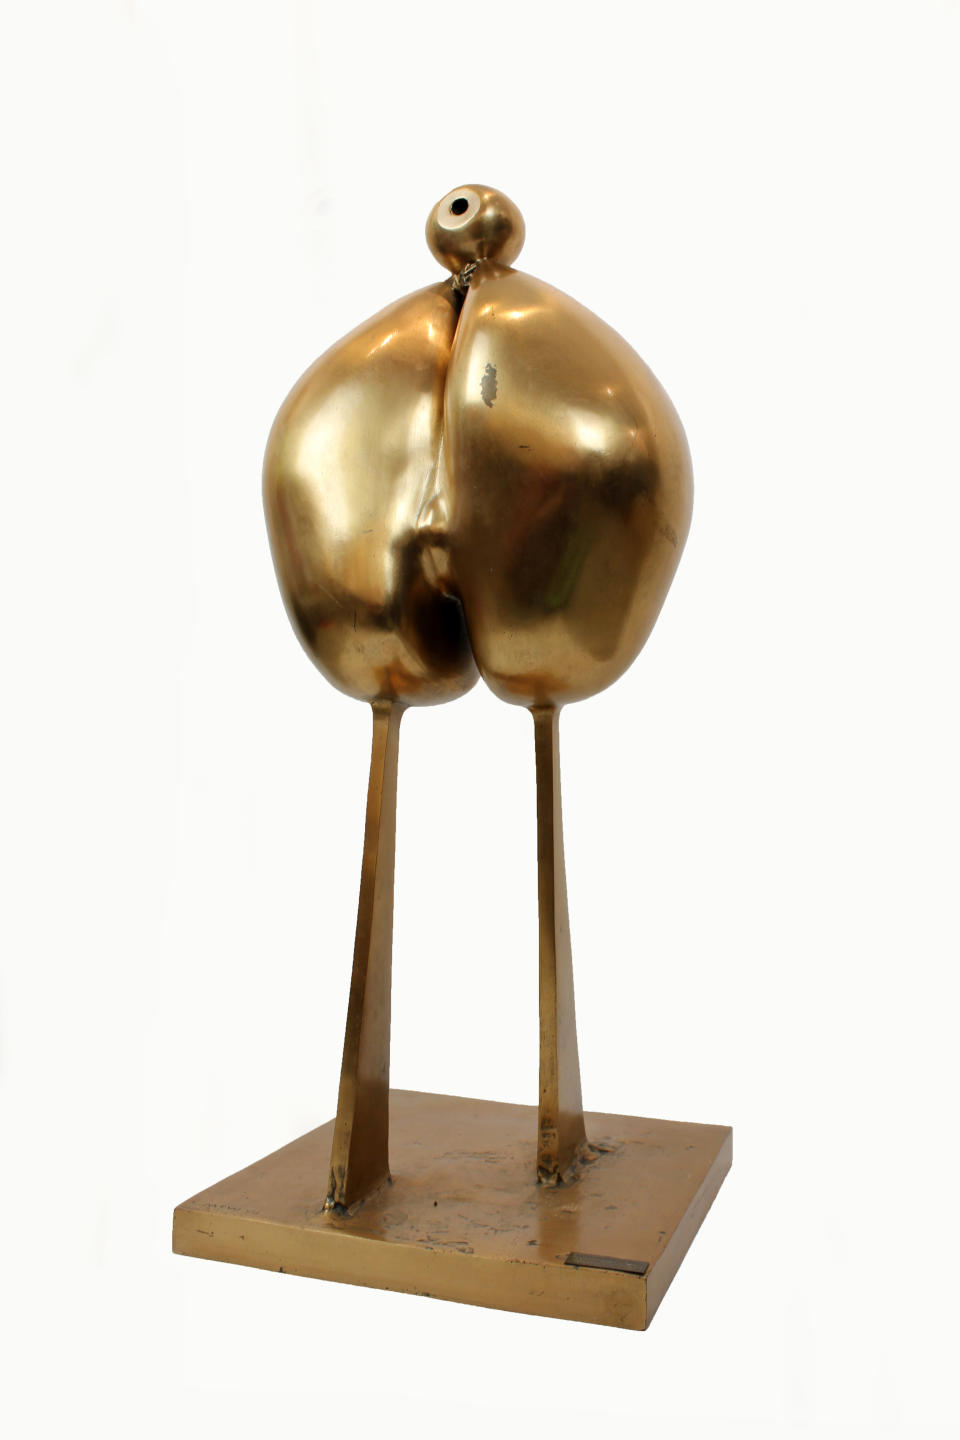 Anthropomorphic Bean, a bronze sculpture by Irish artist F E McWilliam (Robert Malone/PA)